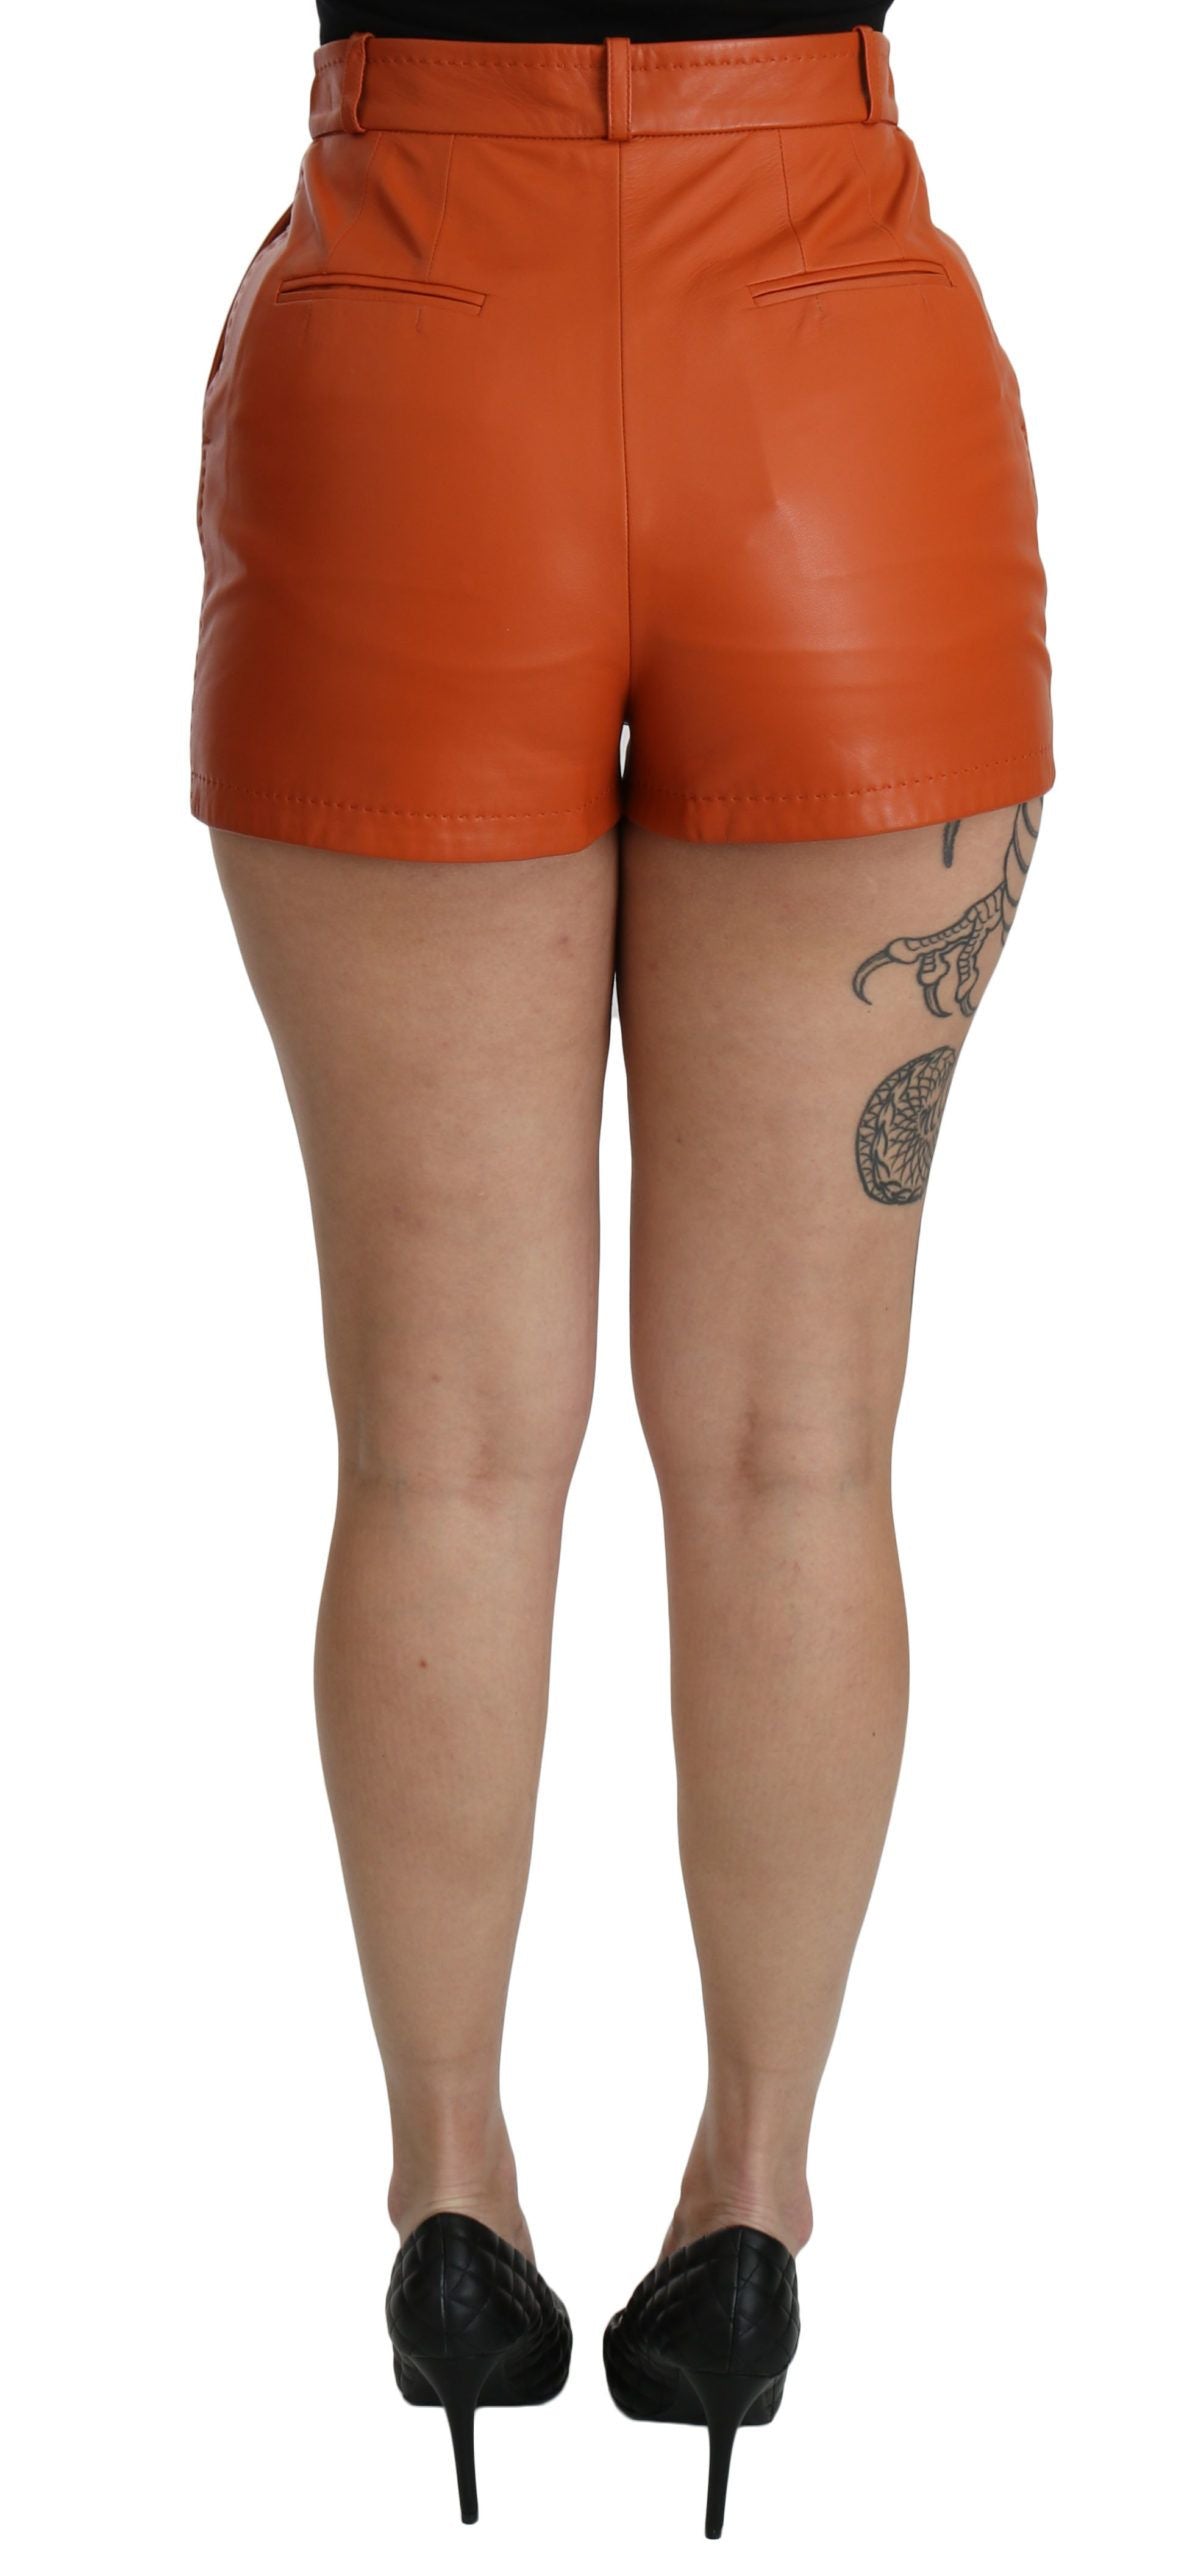 Chic Orange Leather High Waist Hot Pants